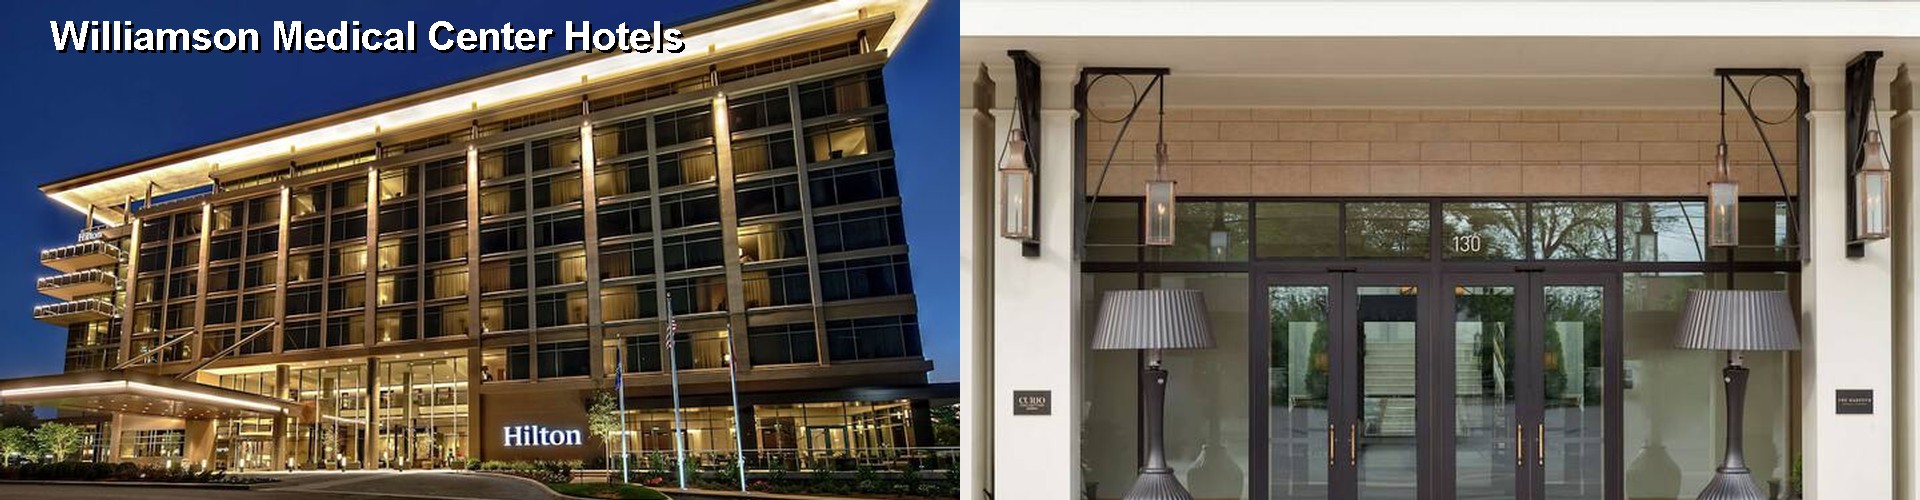 2 Best Hotels near Williamson Medical Center